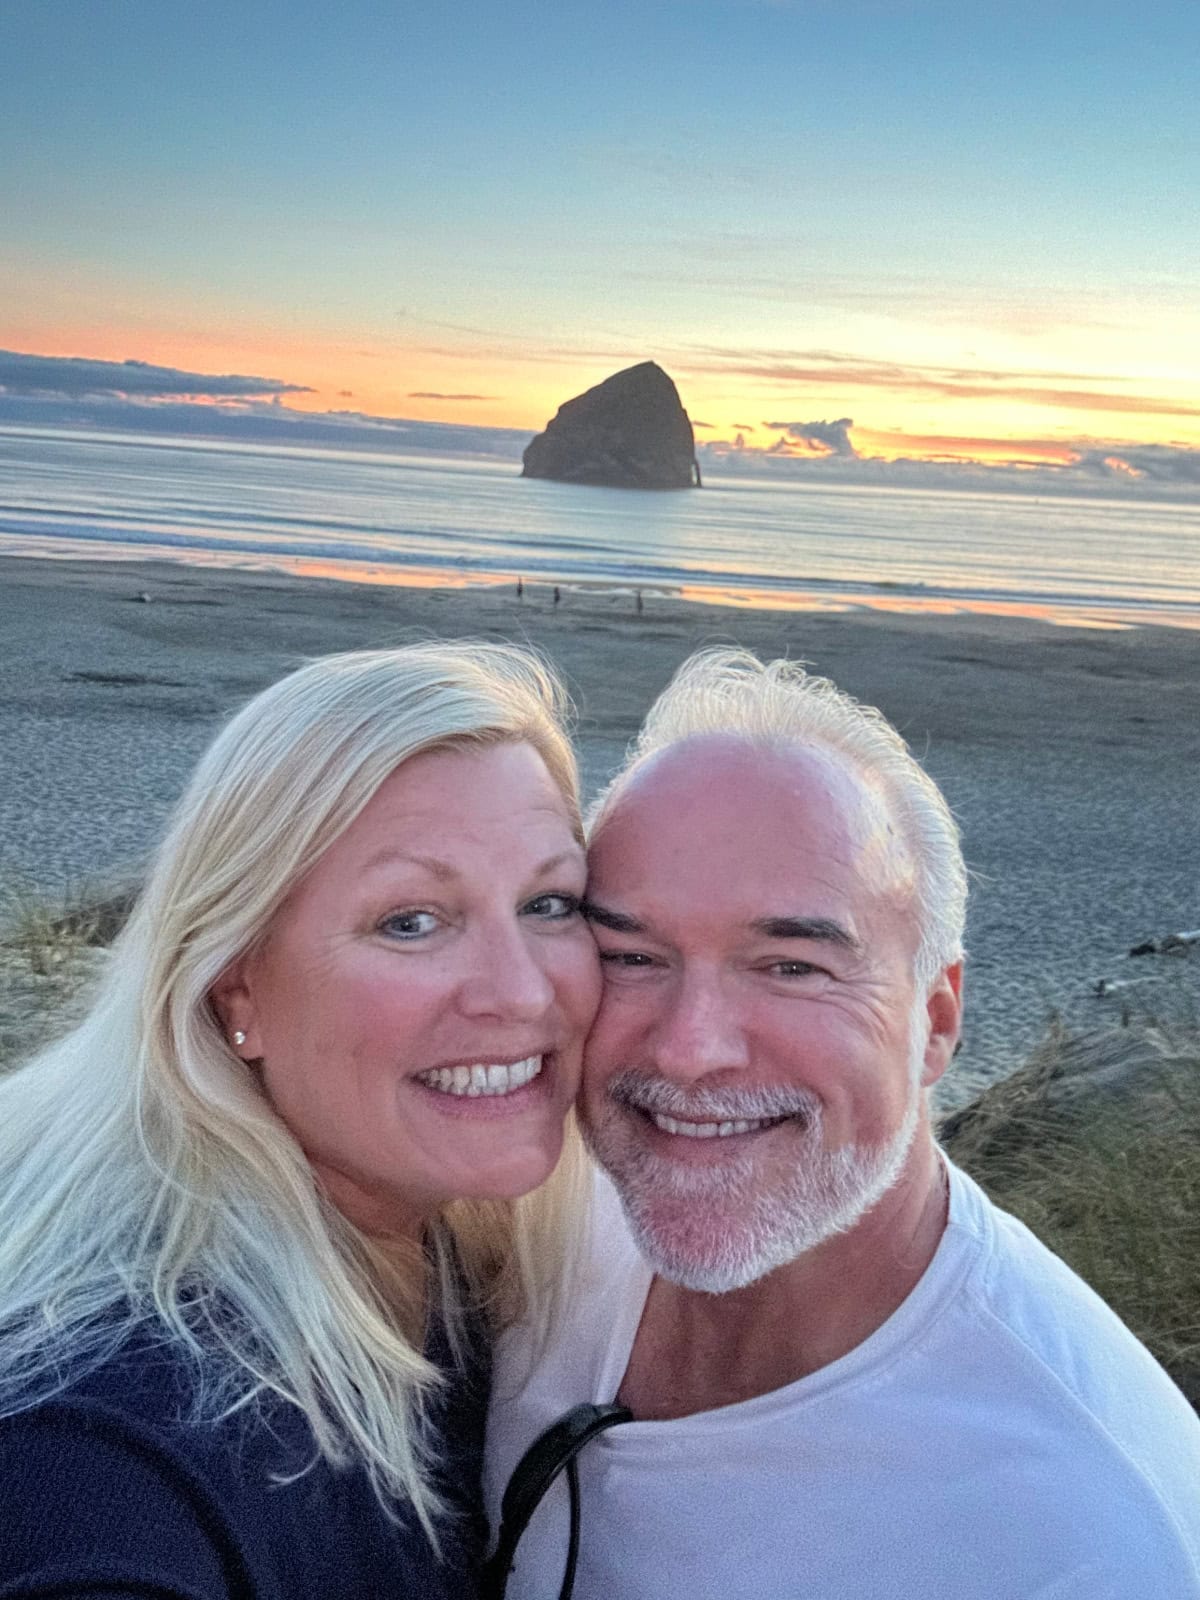 RecipeGirl and husband at Pacific City beach